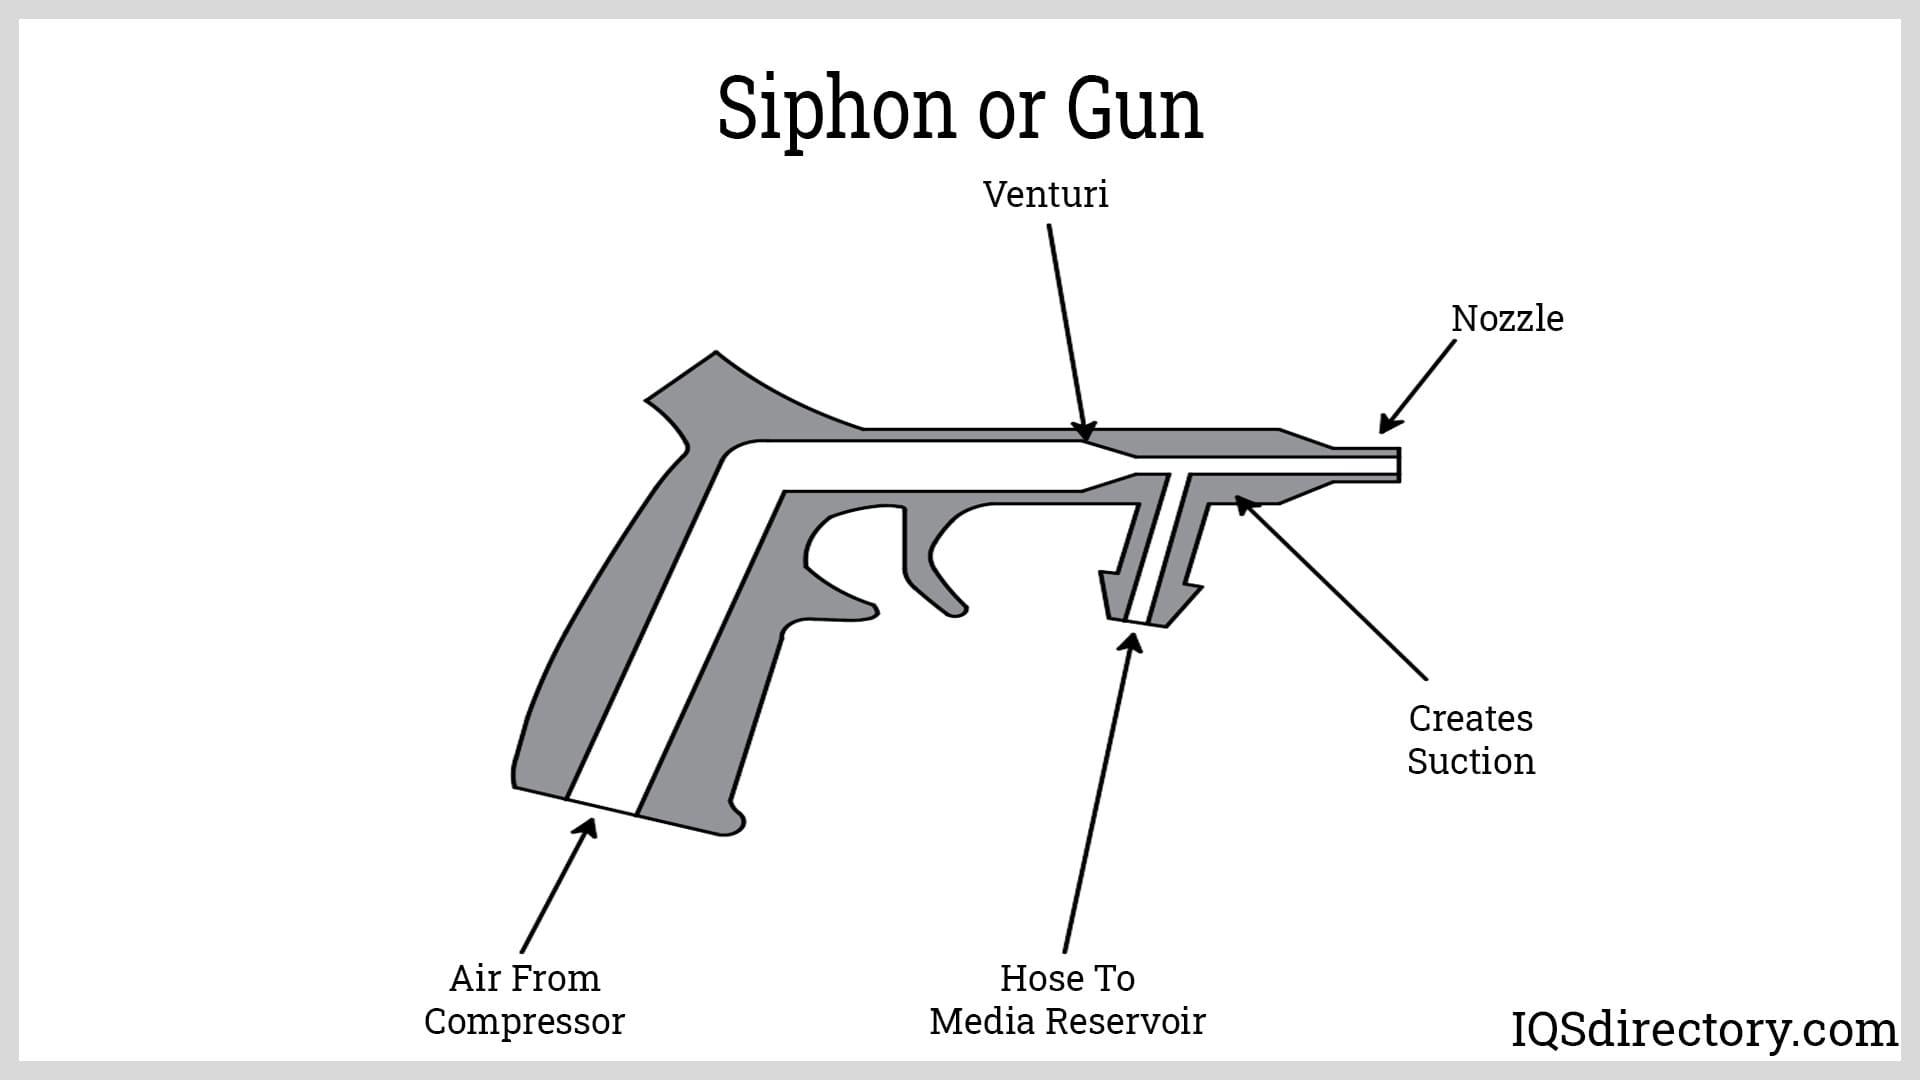 Siphon or Gun